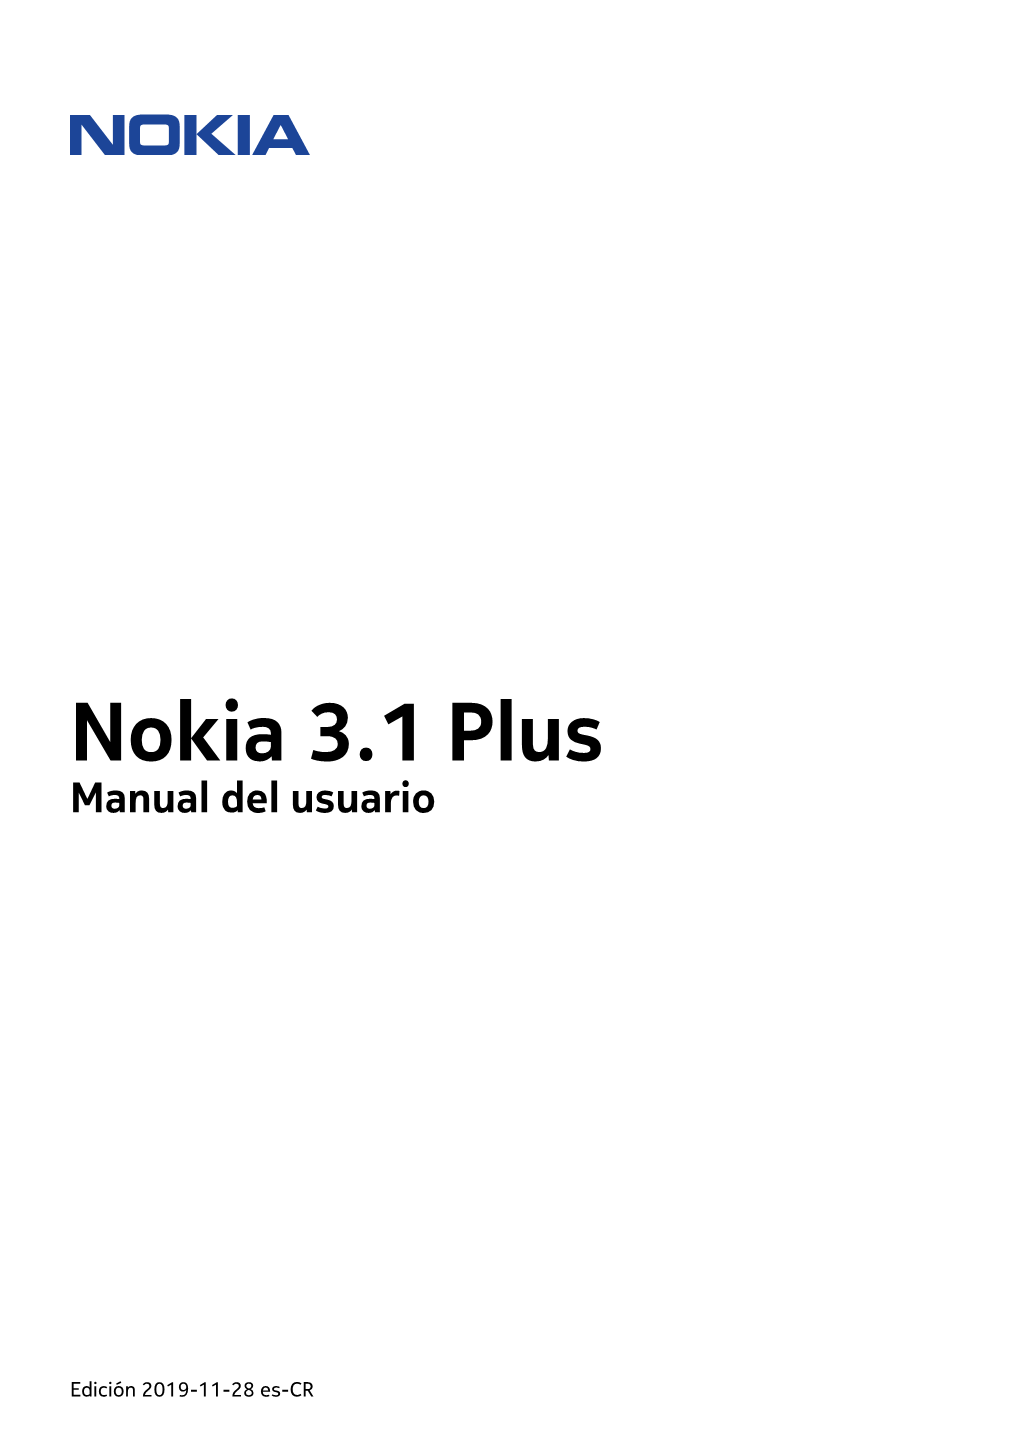 Nokia 3.1 Plus Manual Del Usuario Pdfdisplaydoctitle=True Pdflang=Es